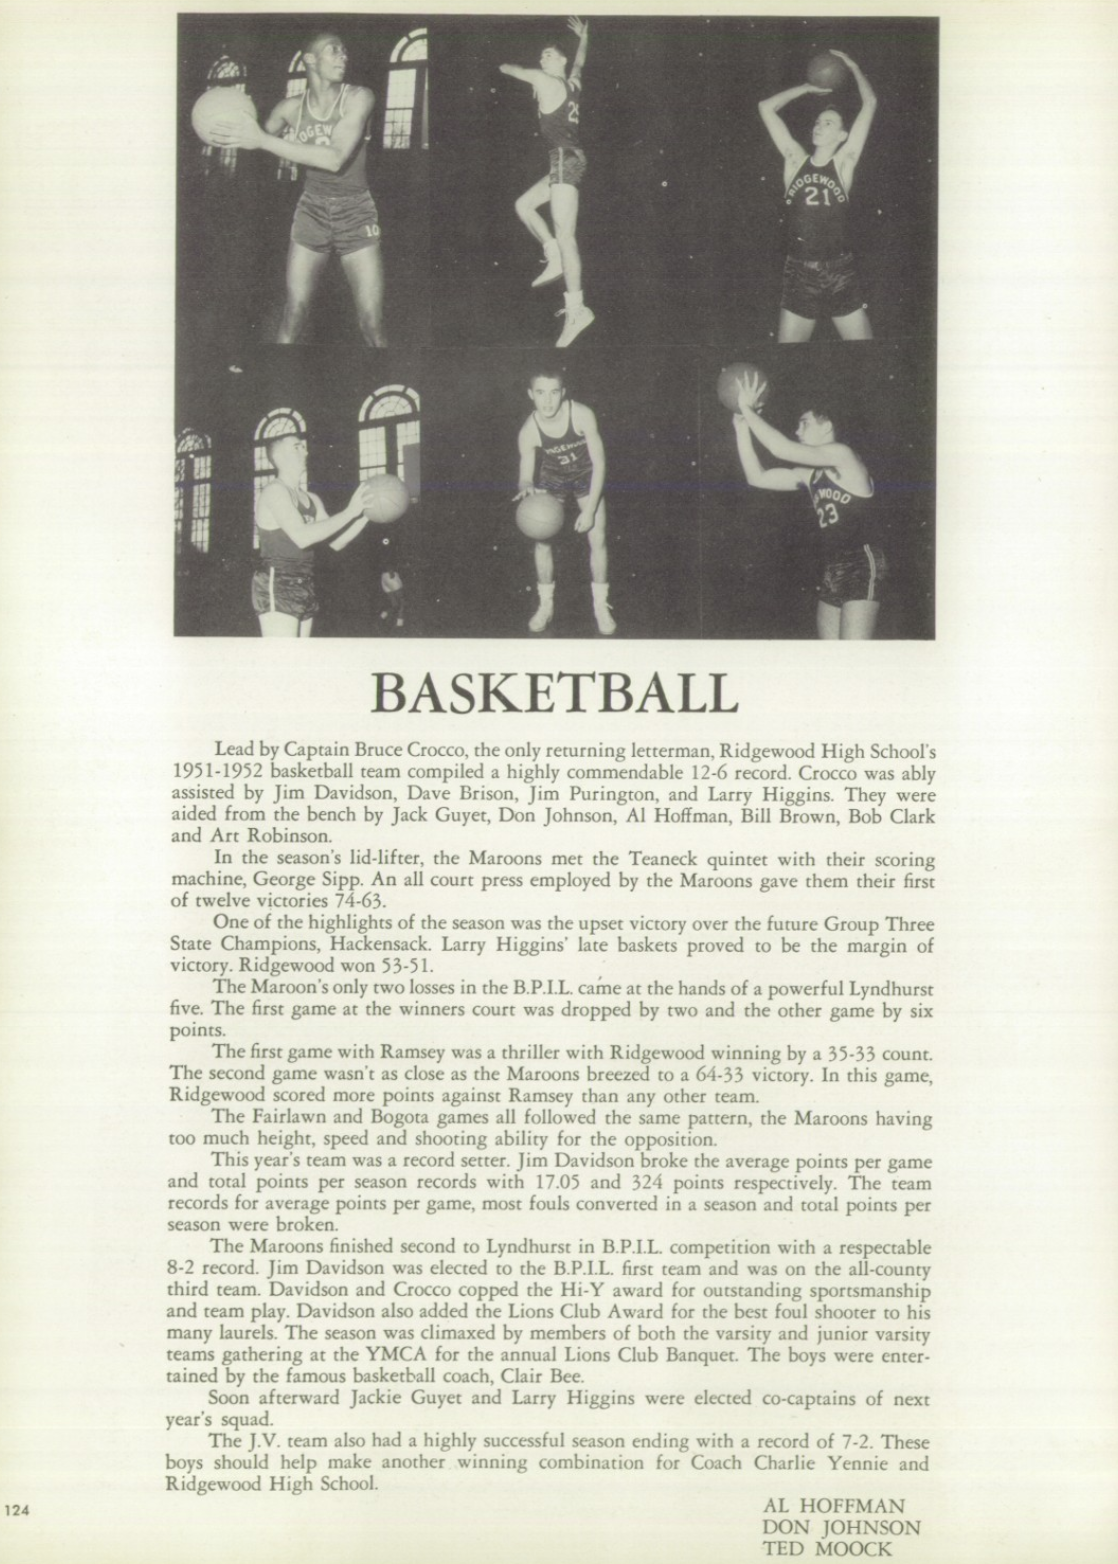 1952 Boys’ Basketball Team